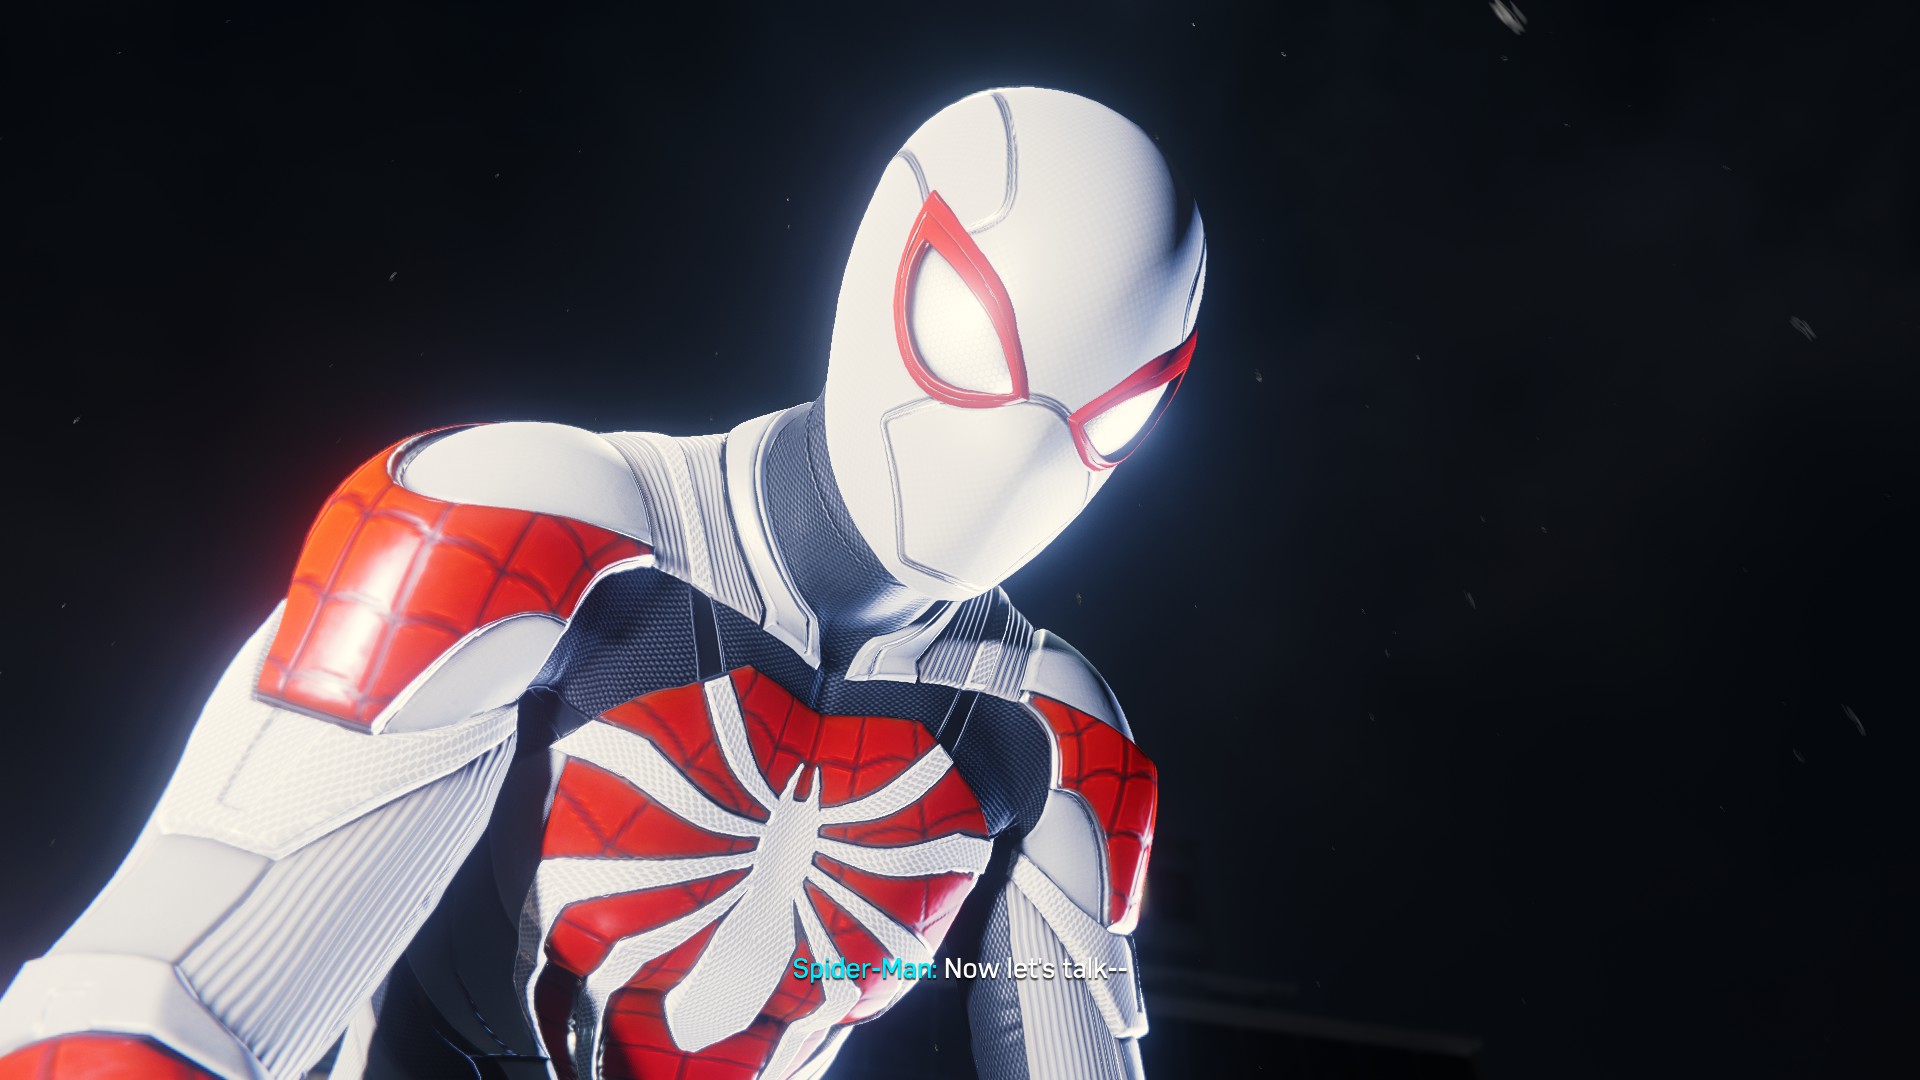 Análise: Marvel's Spider-Man Remastered (PC) é a versão definitiva